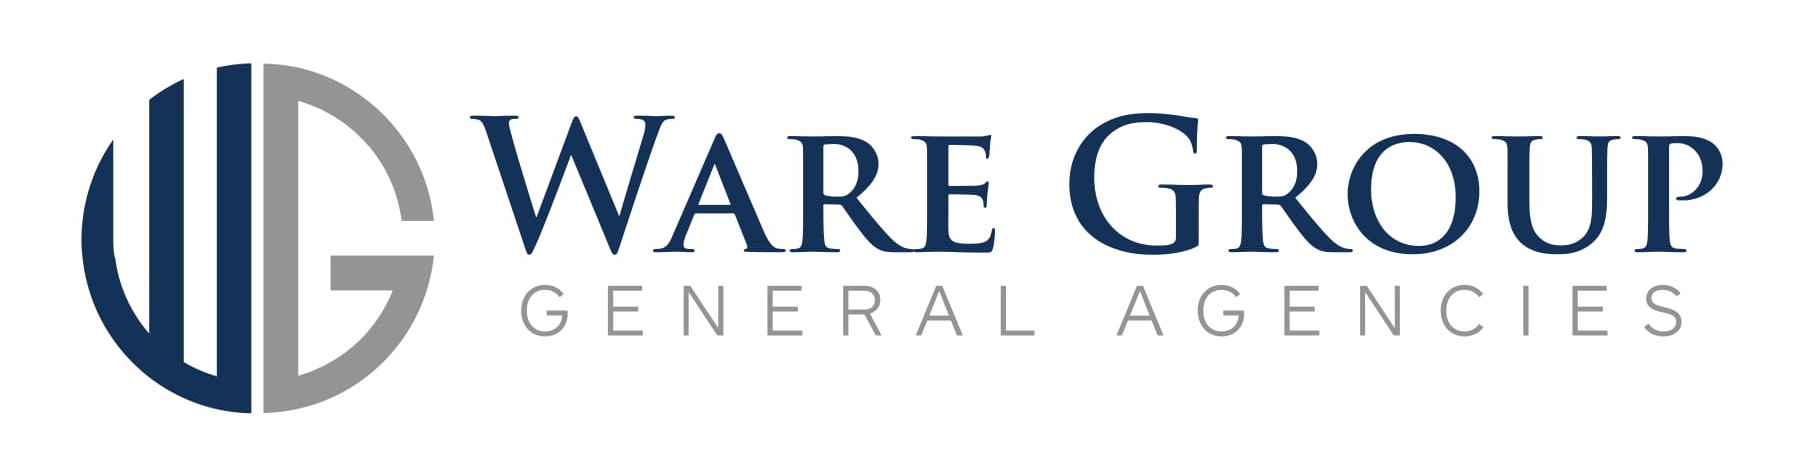 Ware Group General Agencies